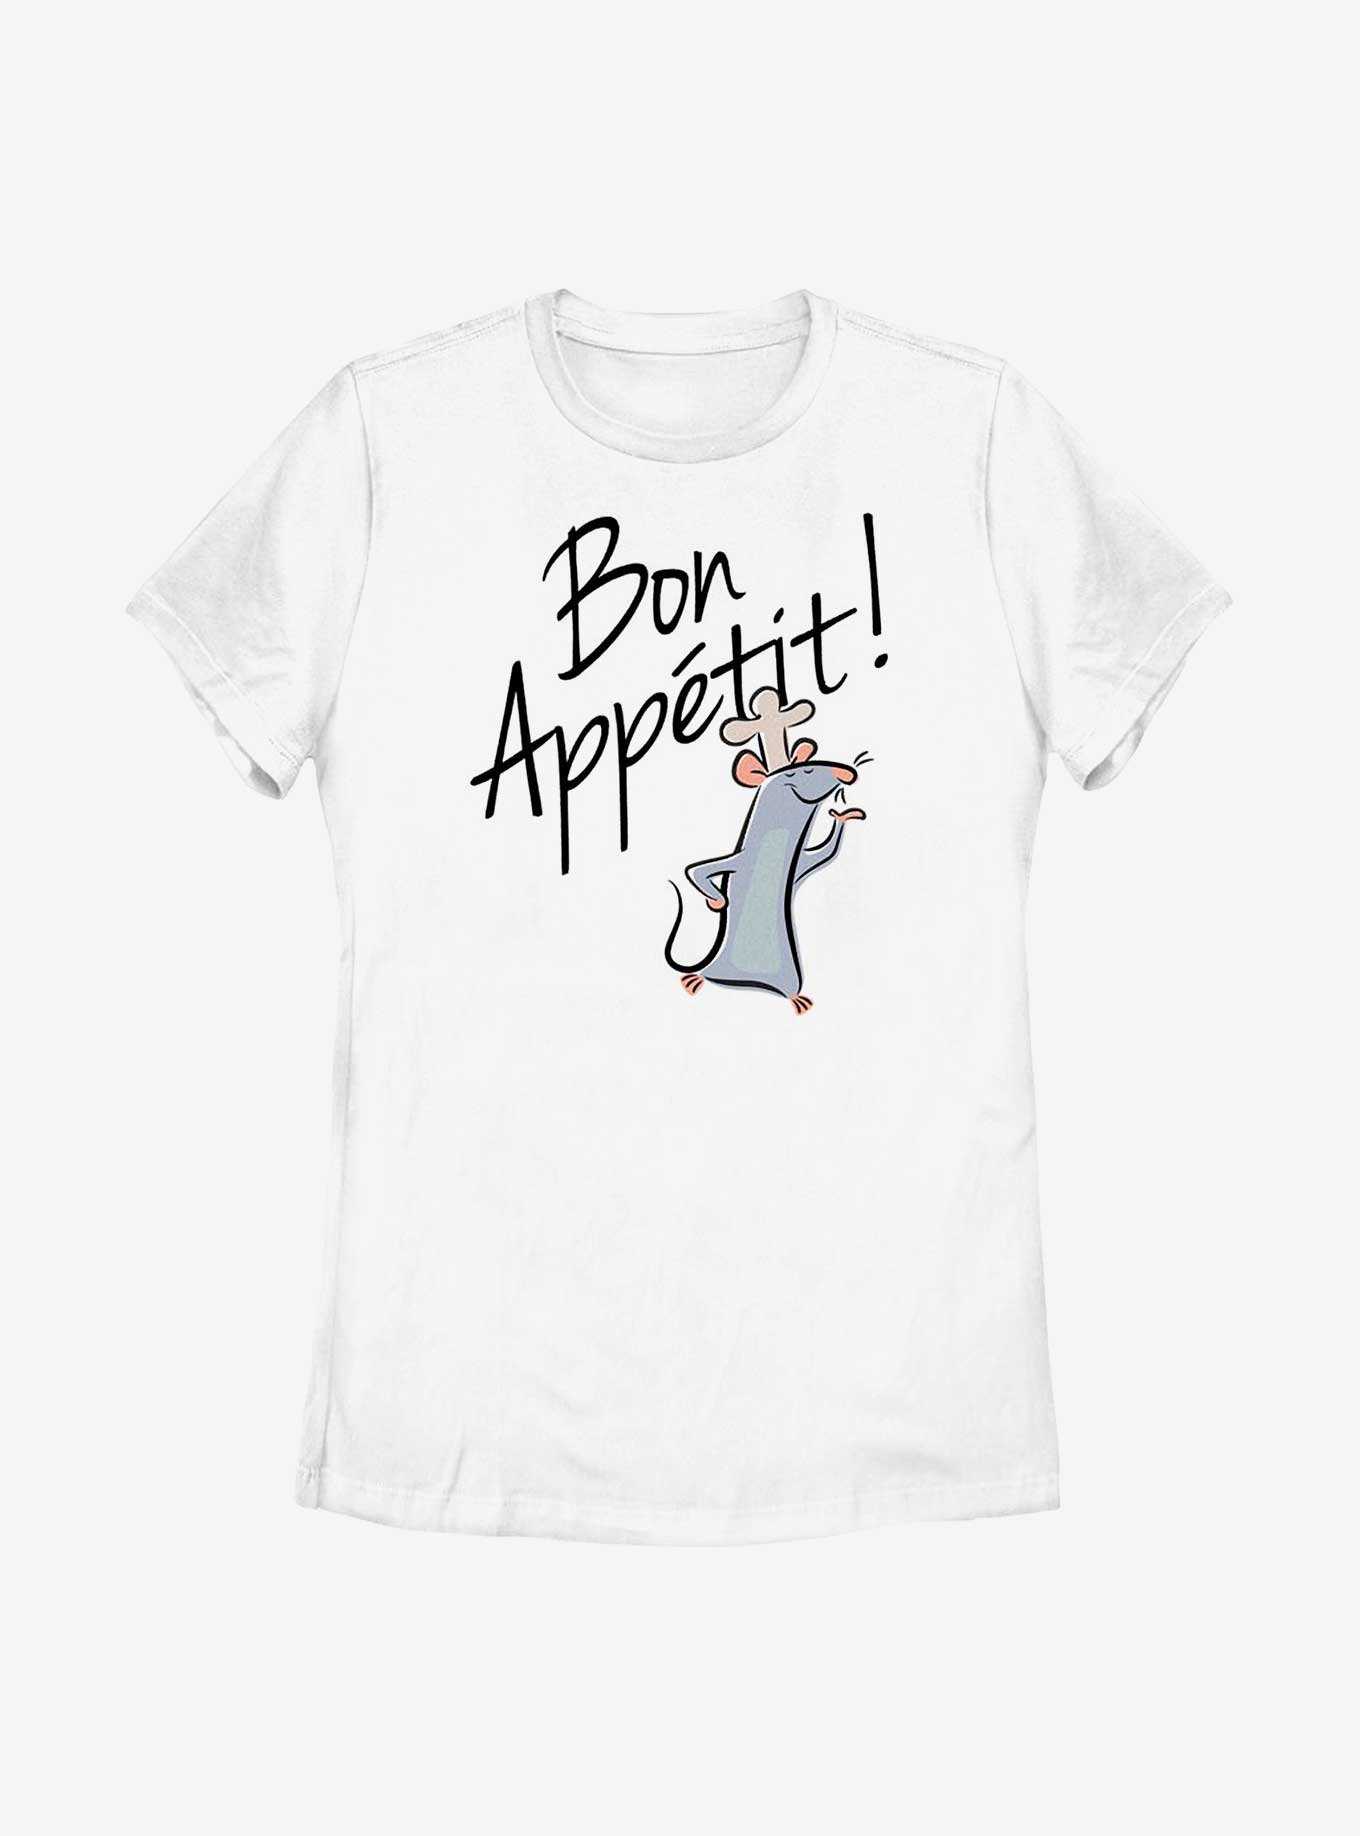 Disney Pixar Ratatouille Bon App?t Womens T-Shirt, , hi-res